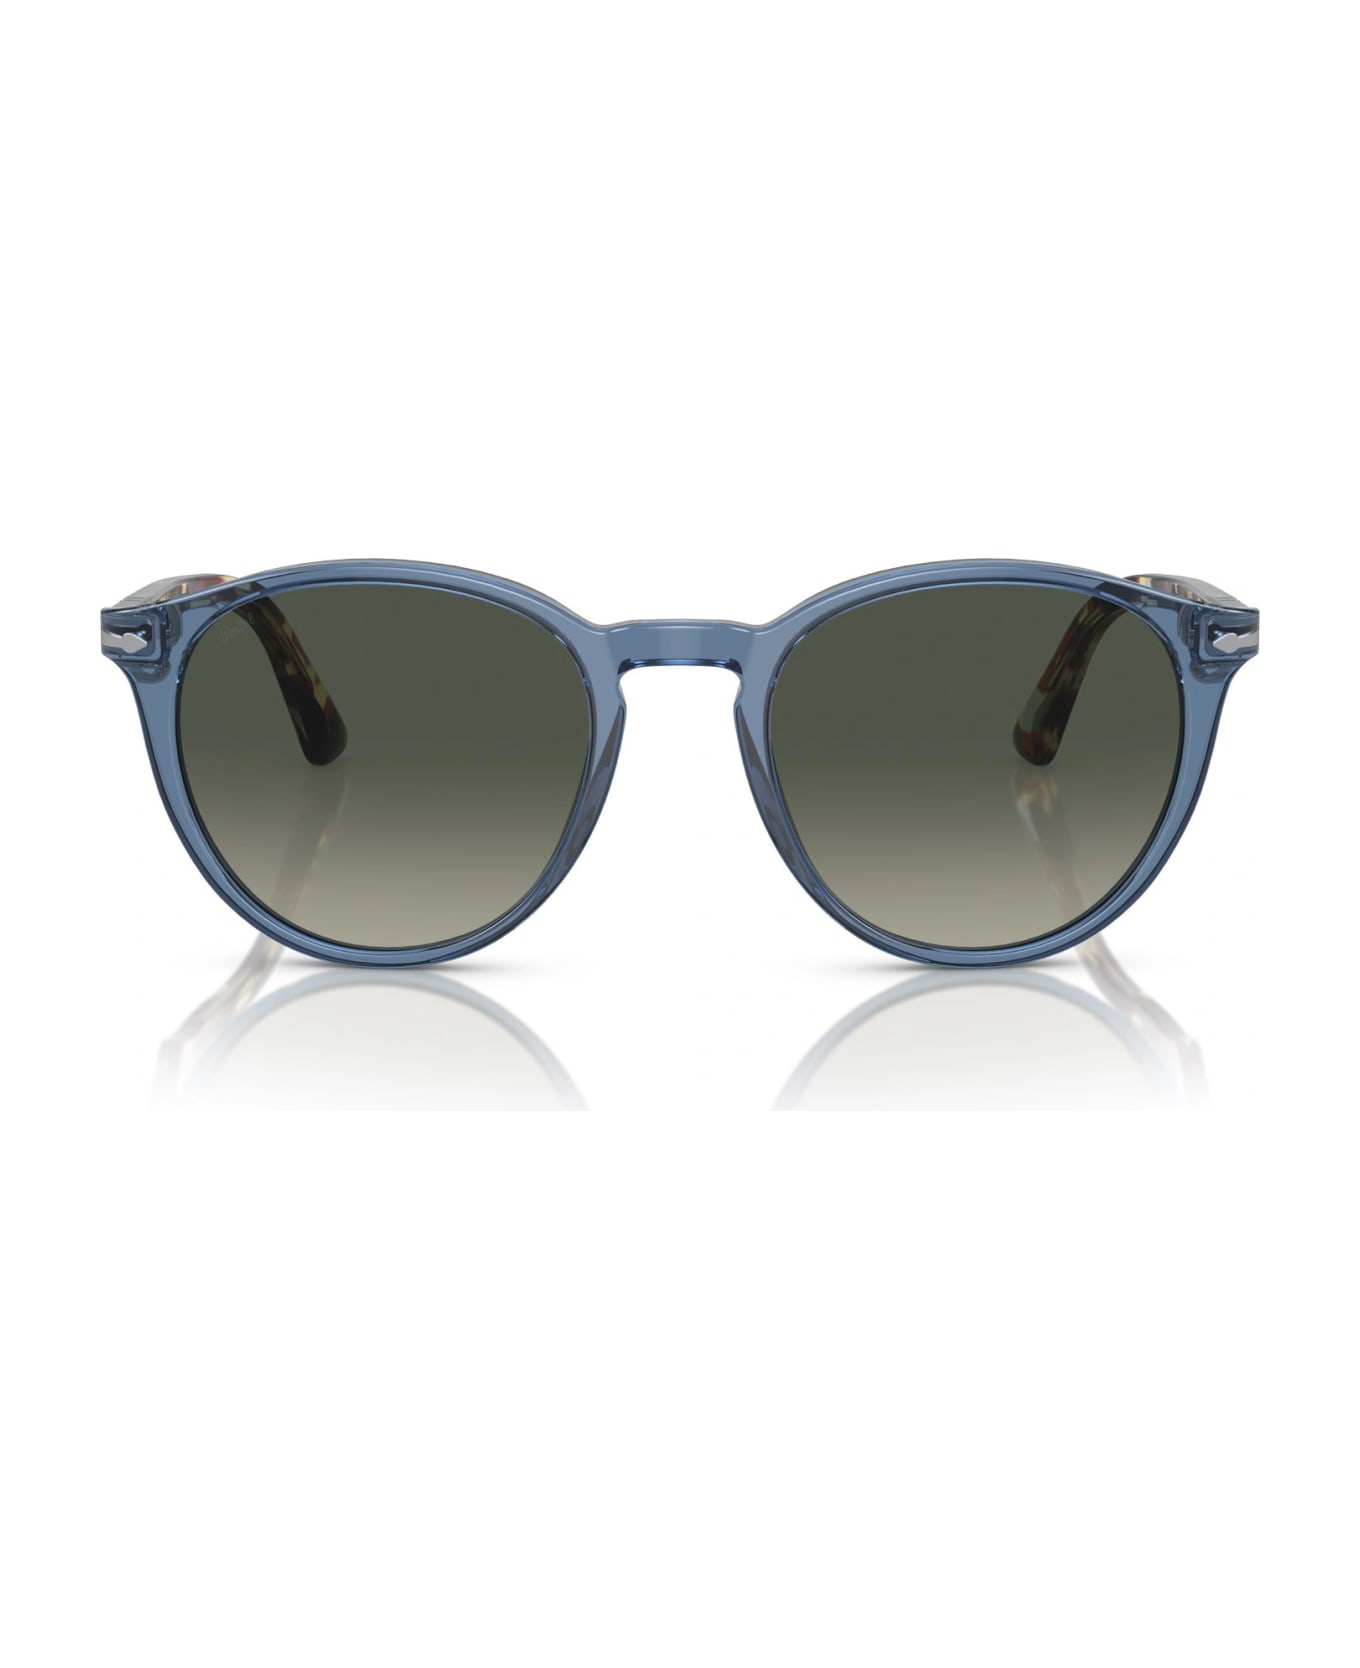 Persol Po3152S 12027/71 Sunglasses - Blu navy lenti grigie degradanti